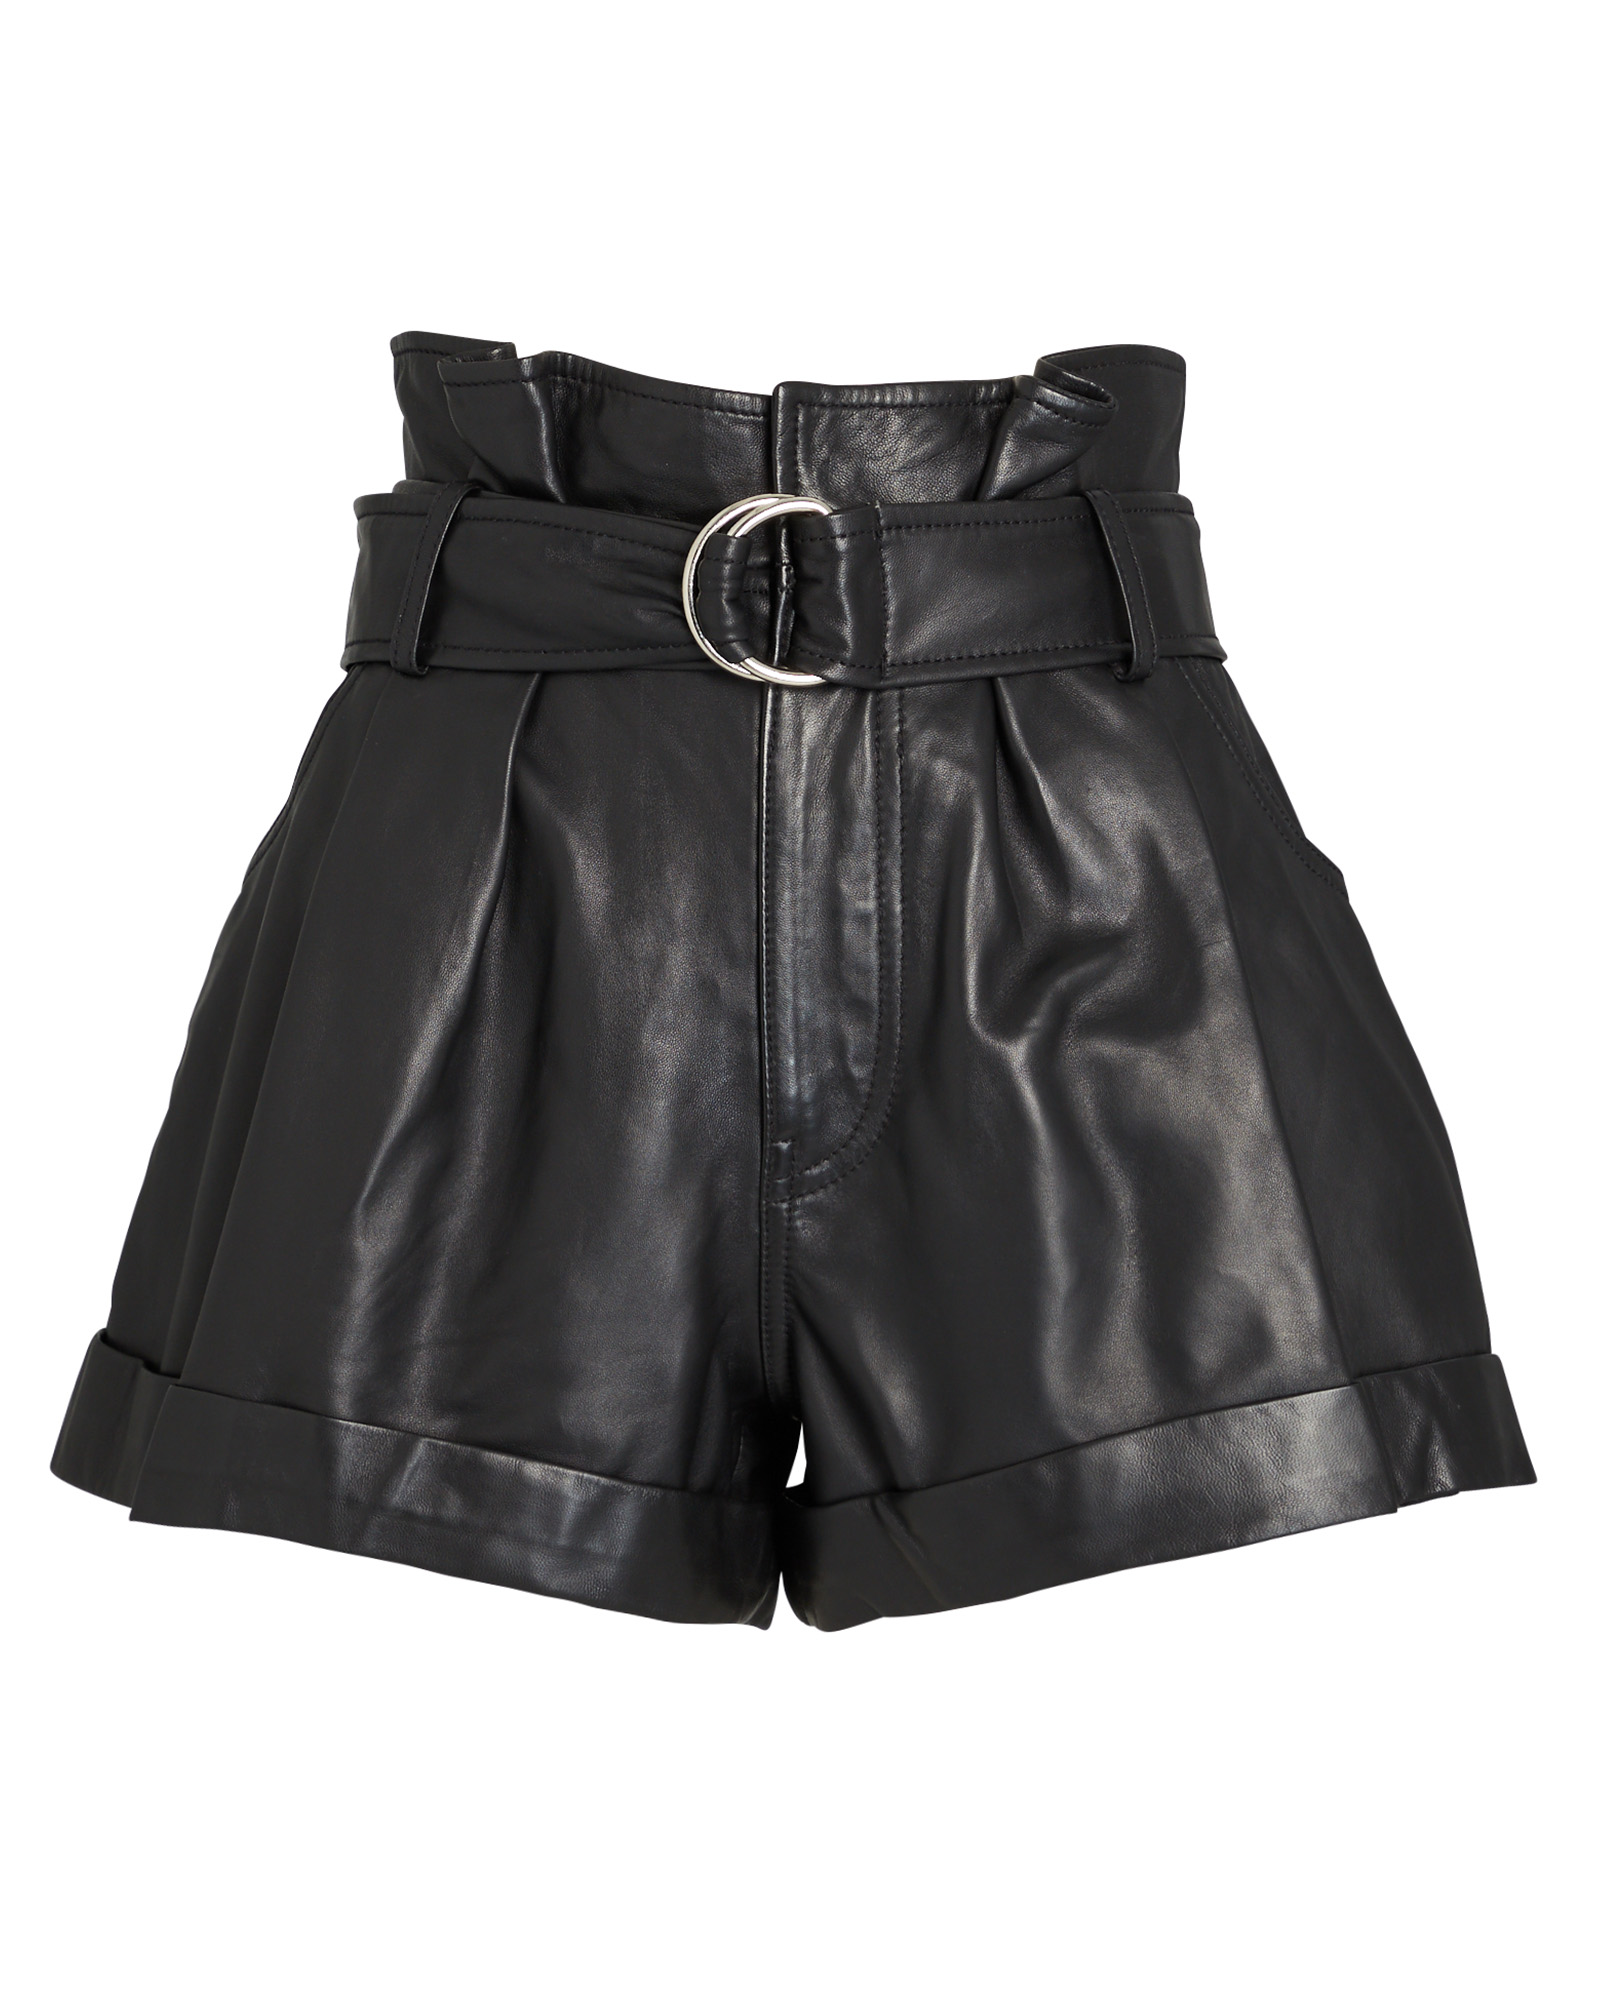 Marissa Webb Dixon Leather Paperbag Shorts | INTERMIX®